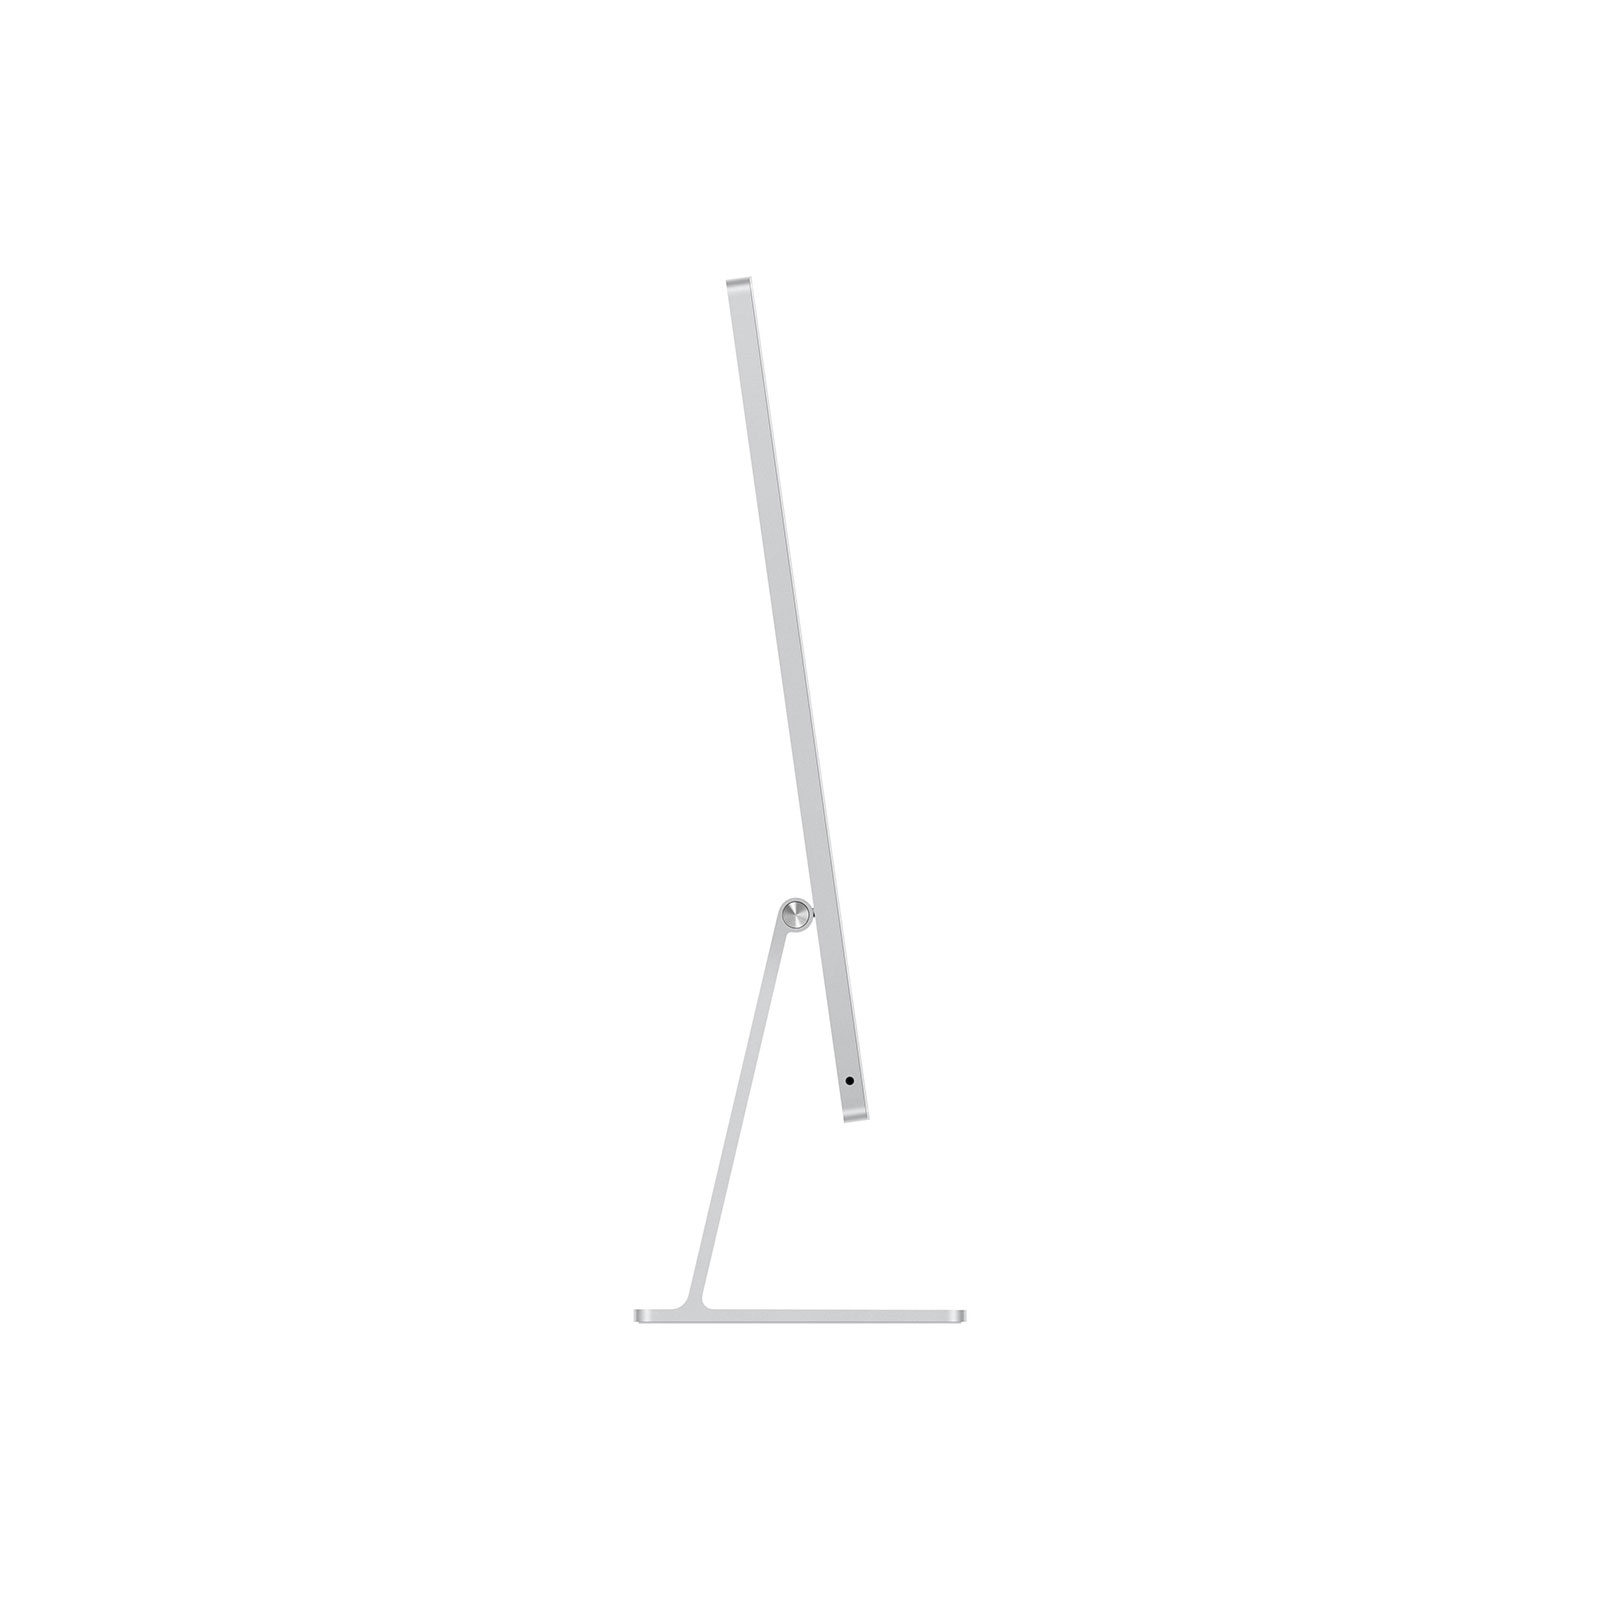 Apple iMac 24 Zoll CTO silber